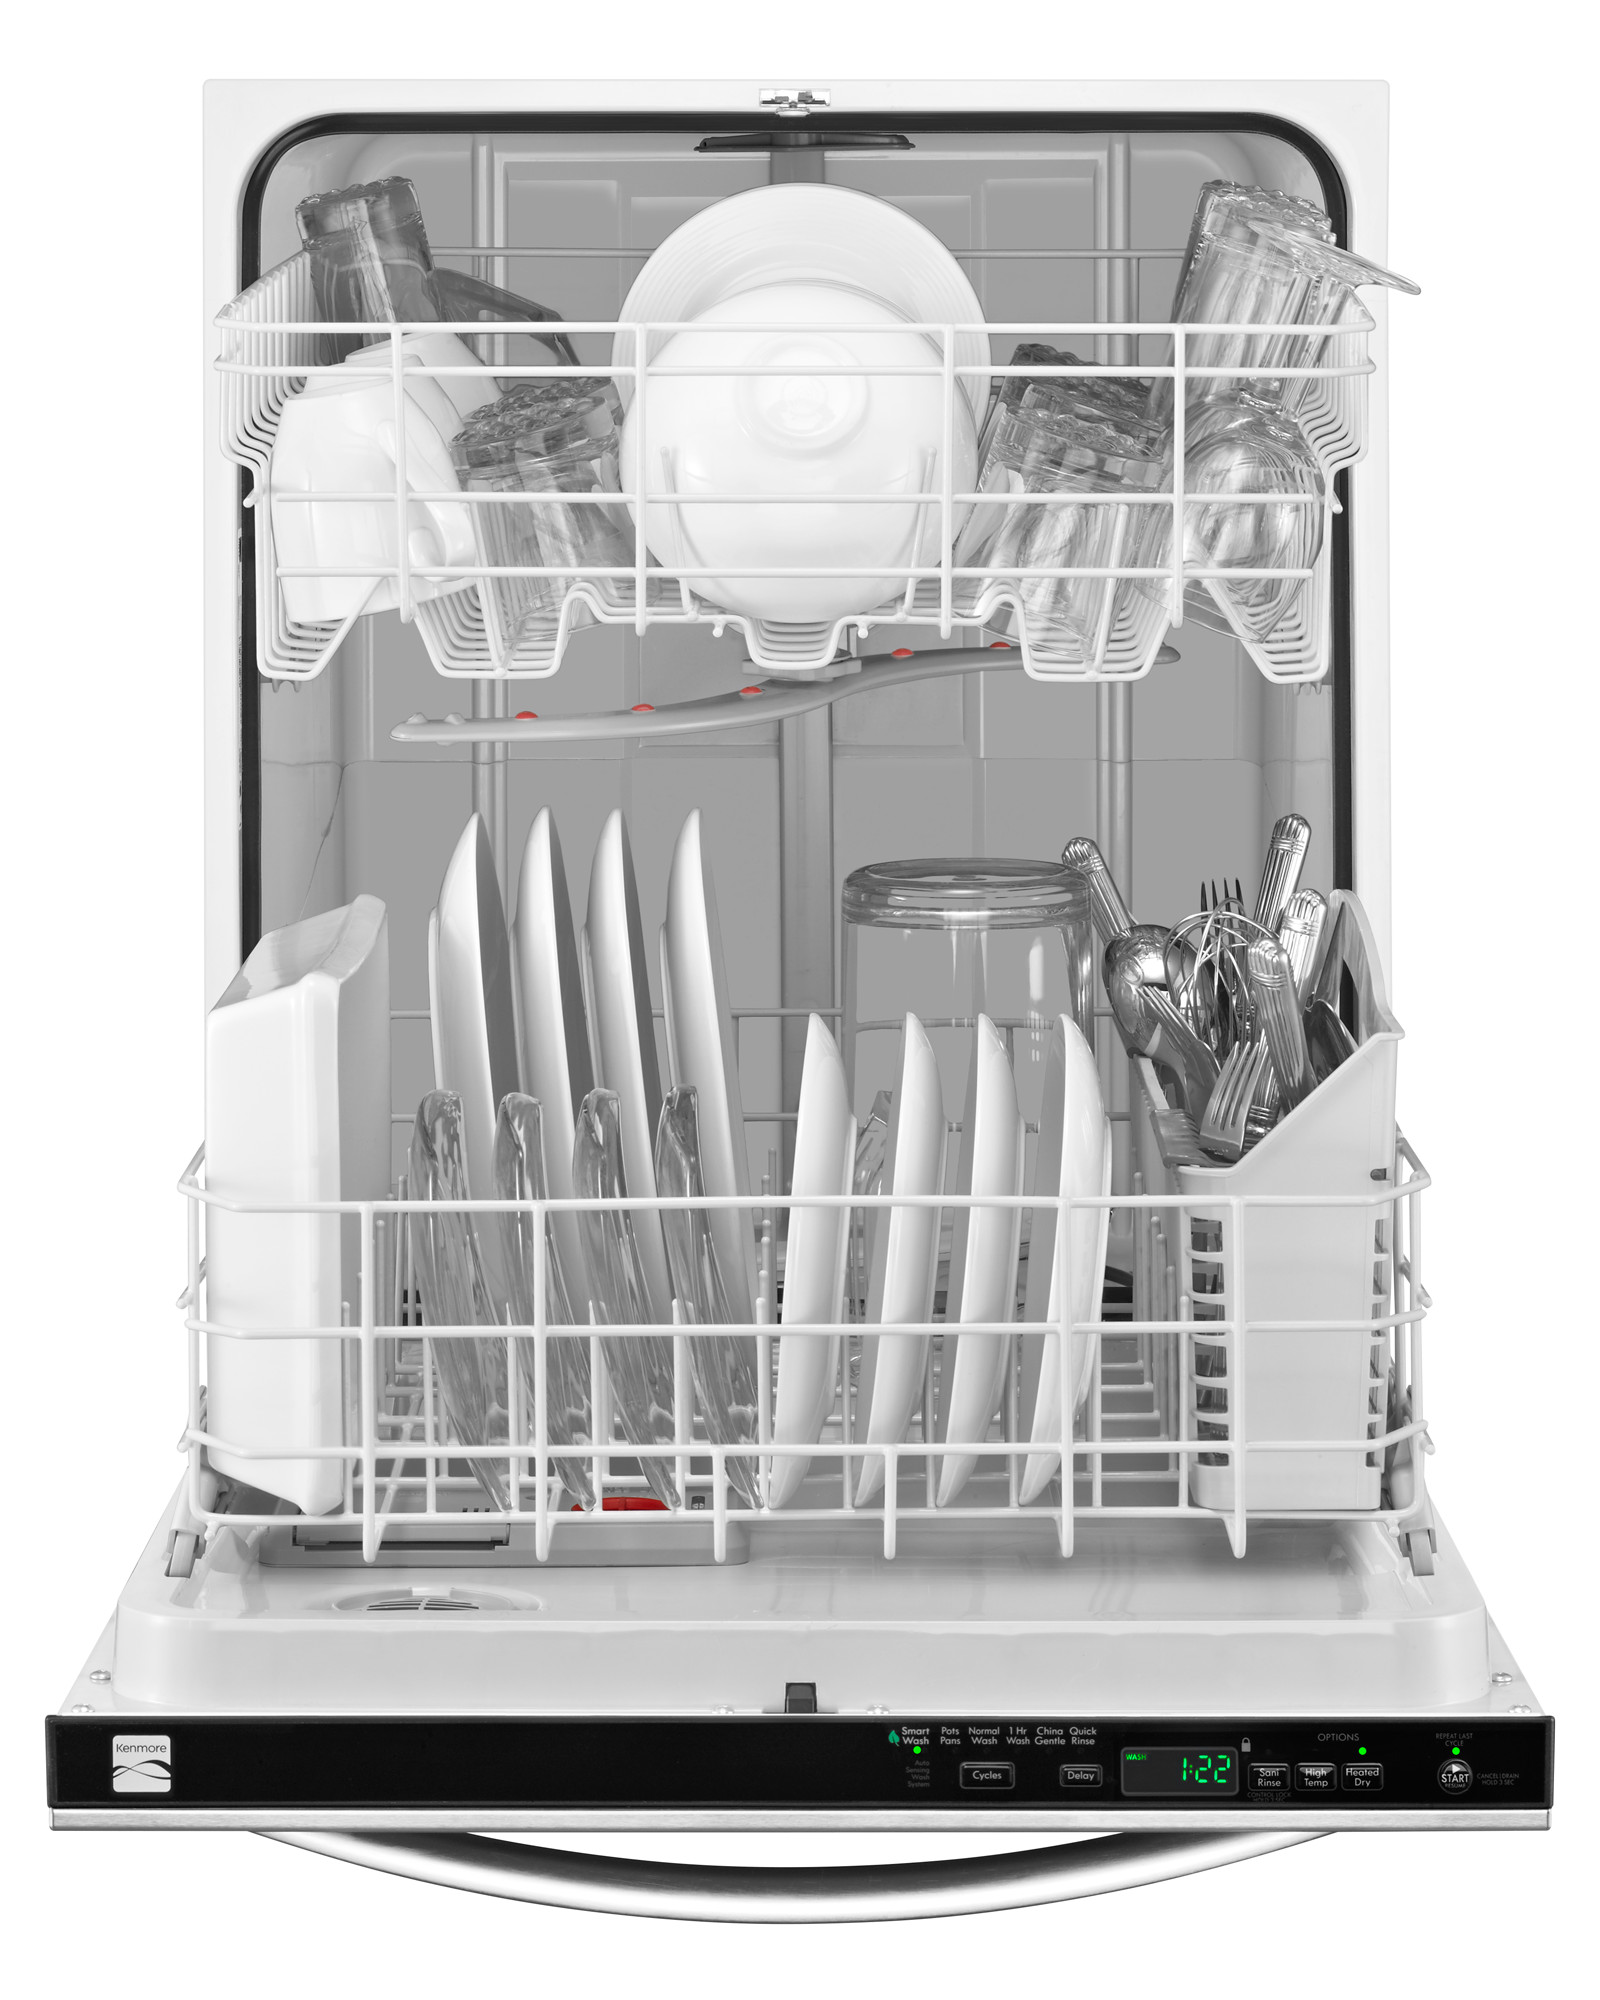 Kenmore 24″ Built-In Dishwasher w/ HE SmartWash Cycle—$297.49